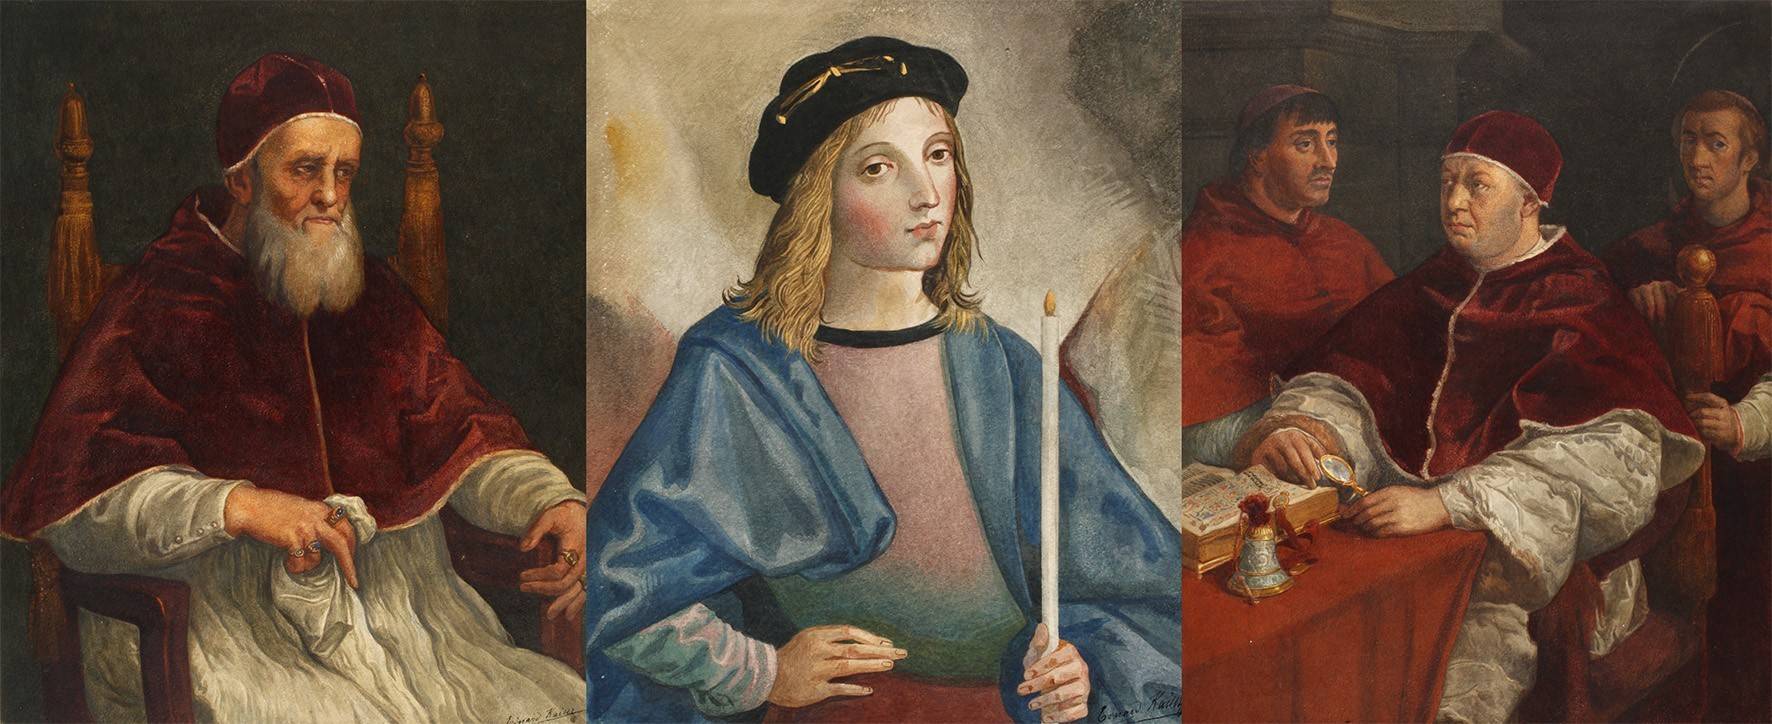 Eduard Kaiser, Drei Portraits nach Gemälden der Renaissance